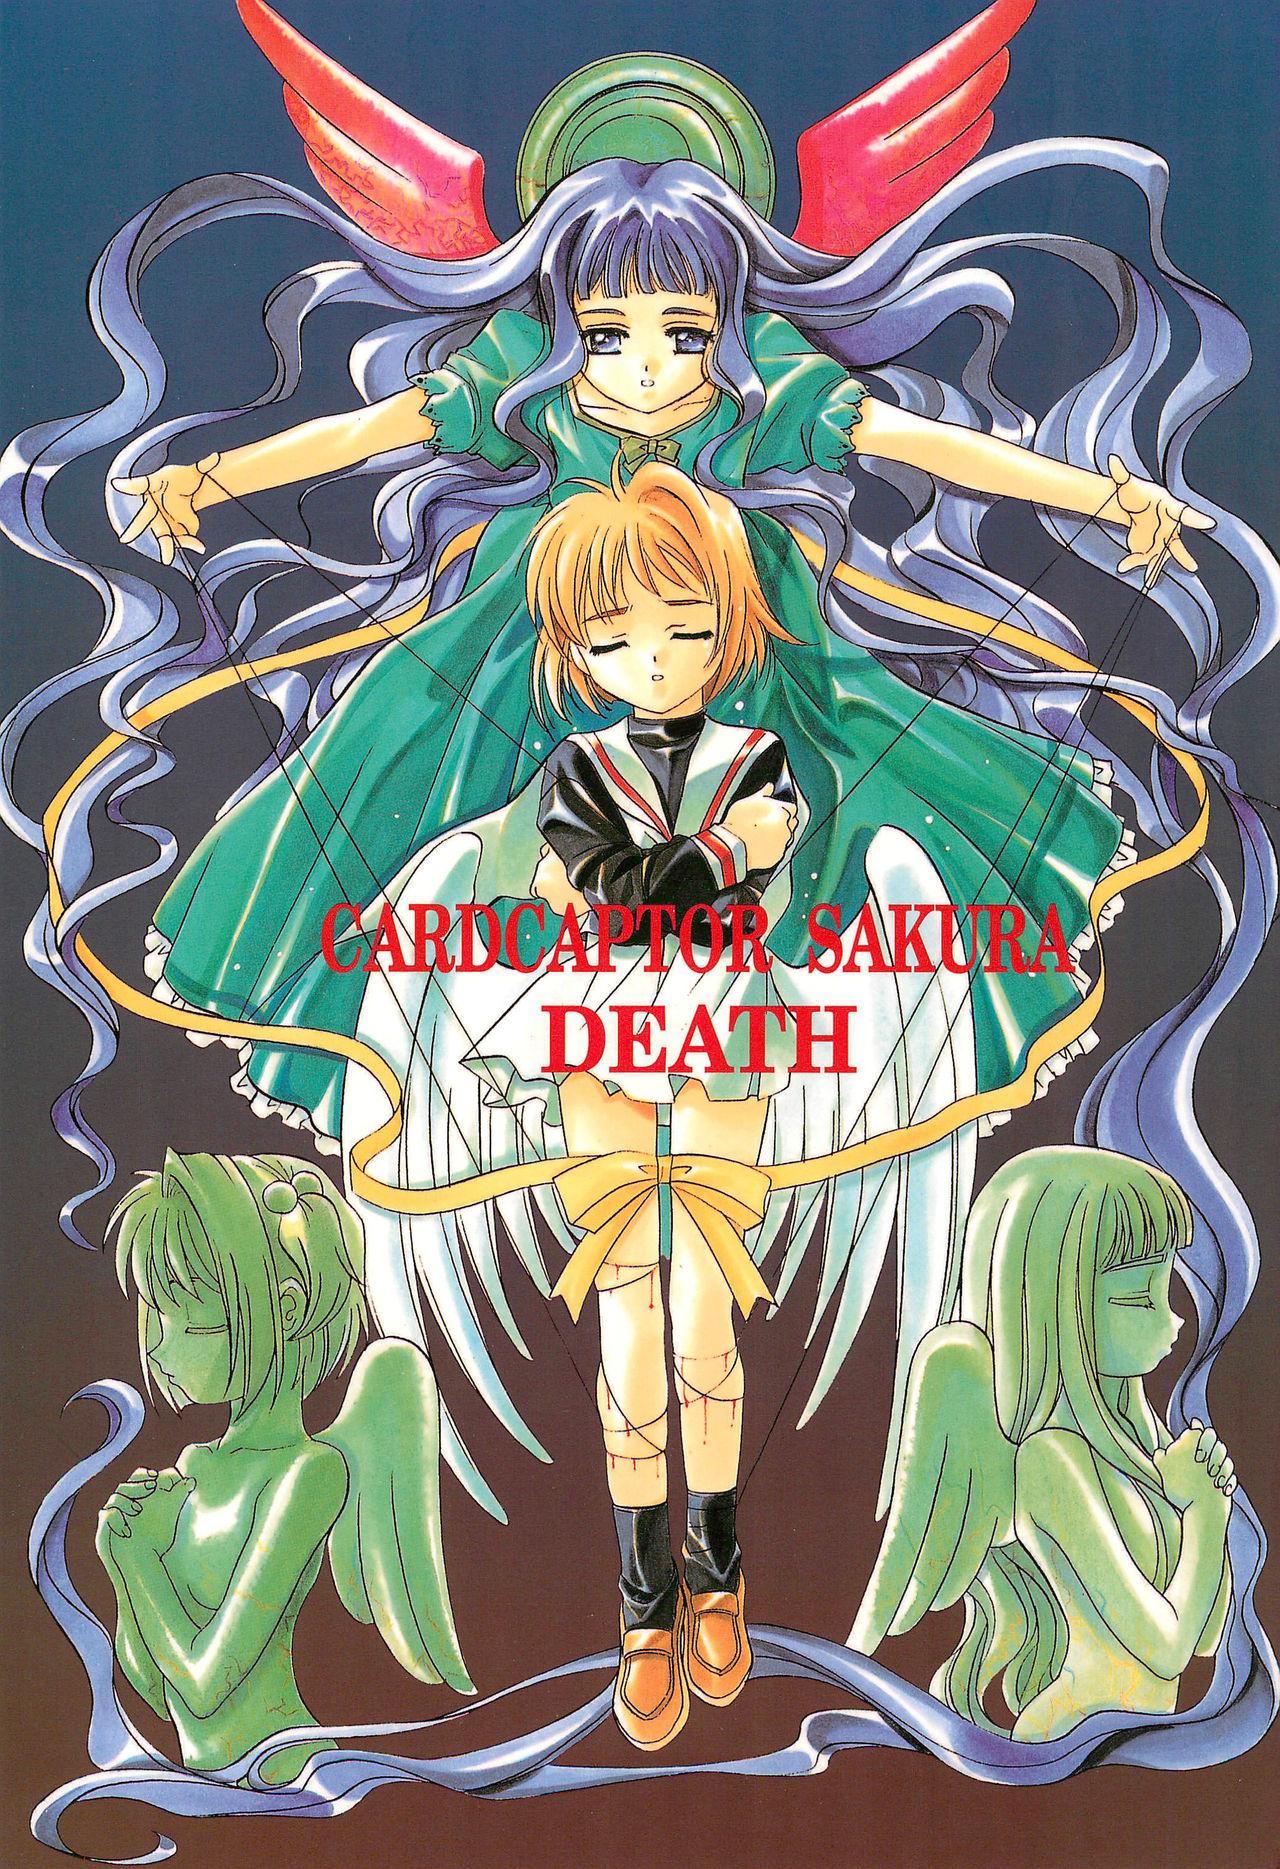 Rough CARDCAPTOR SAKURA DEATH - Cardcaptor sakura Casada - Picture 1